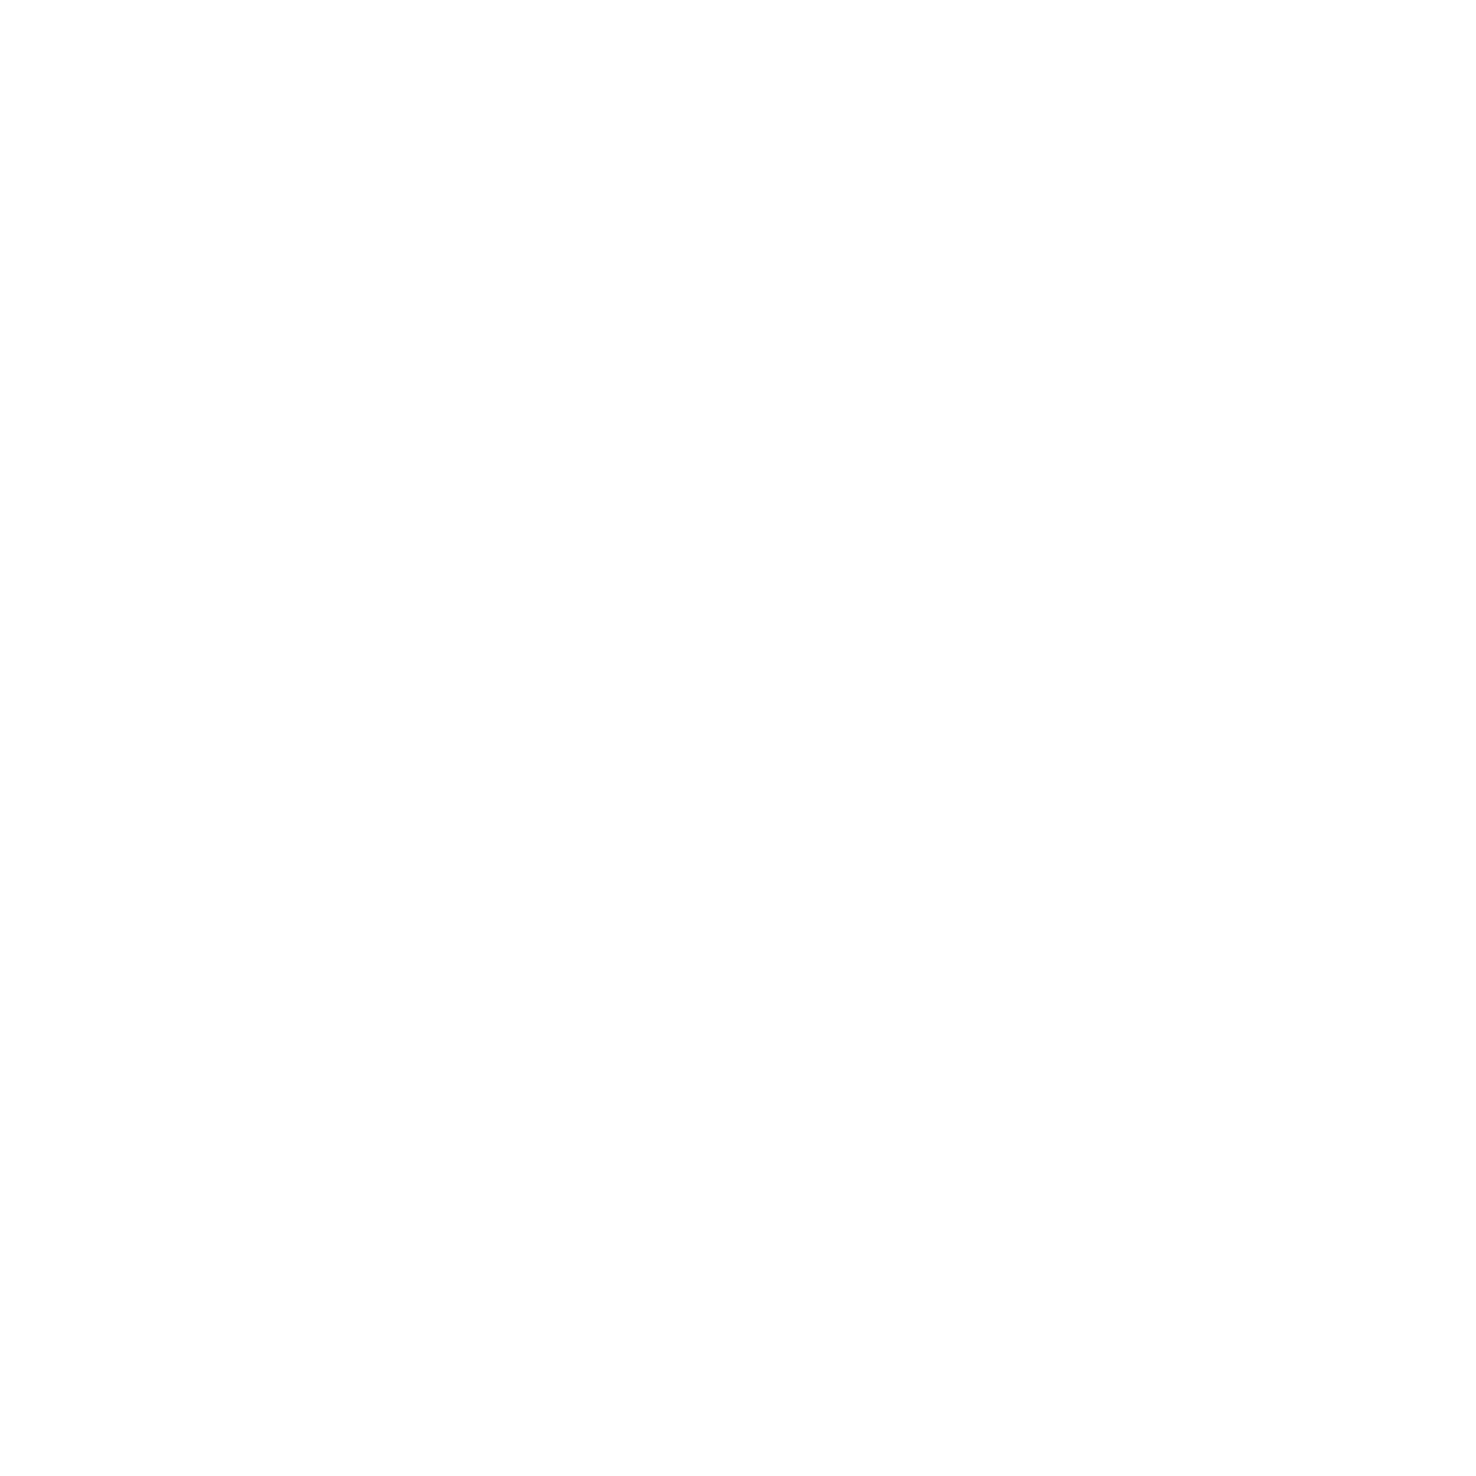 Frontier Communications logo